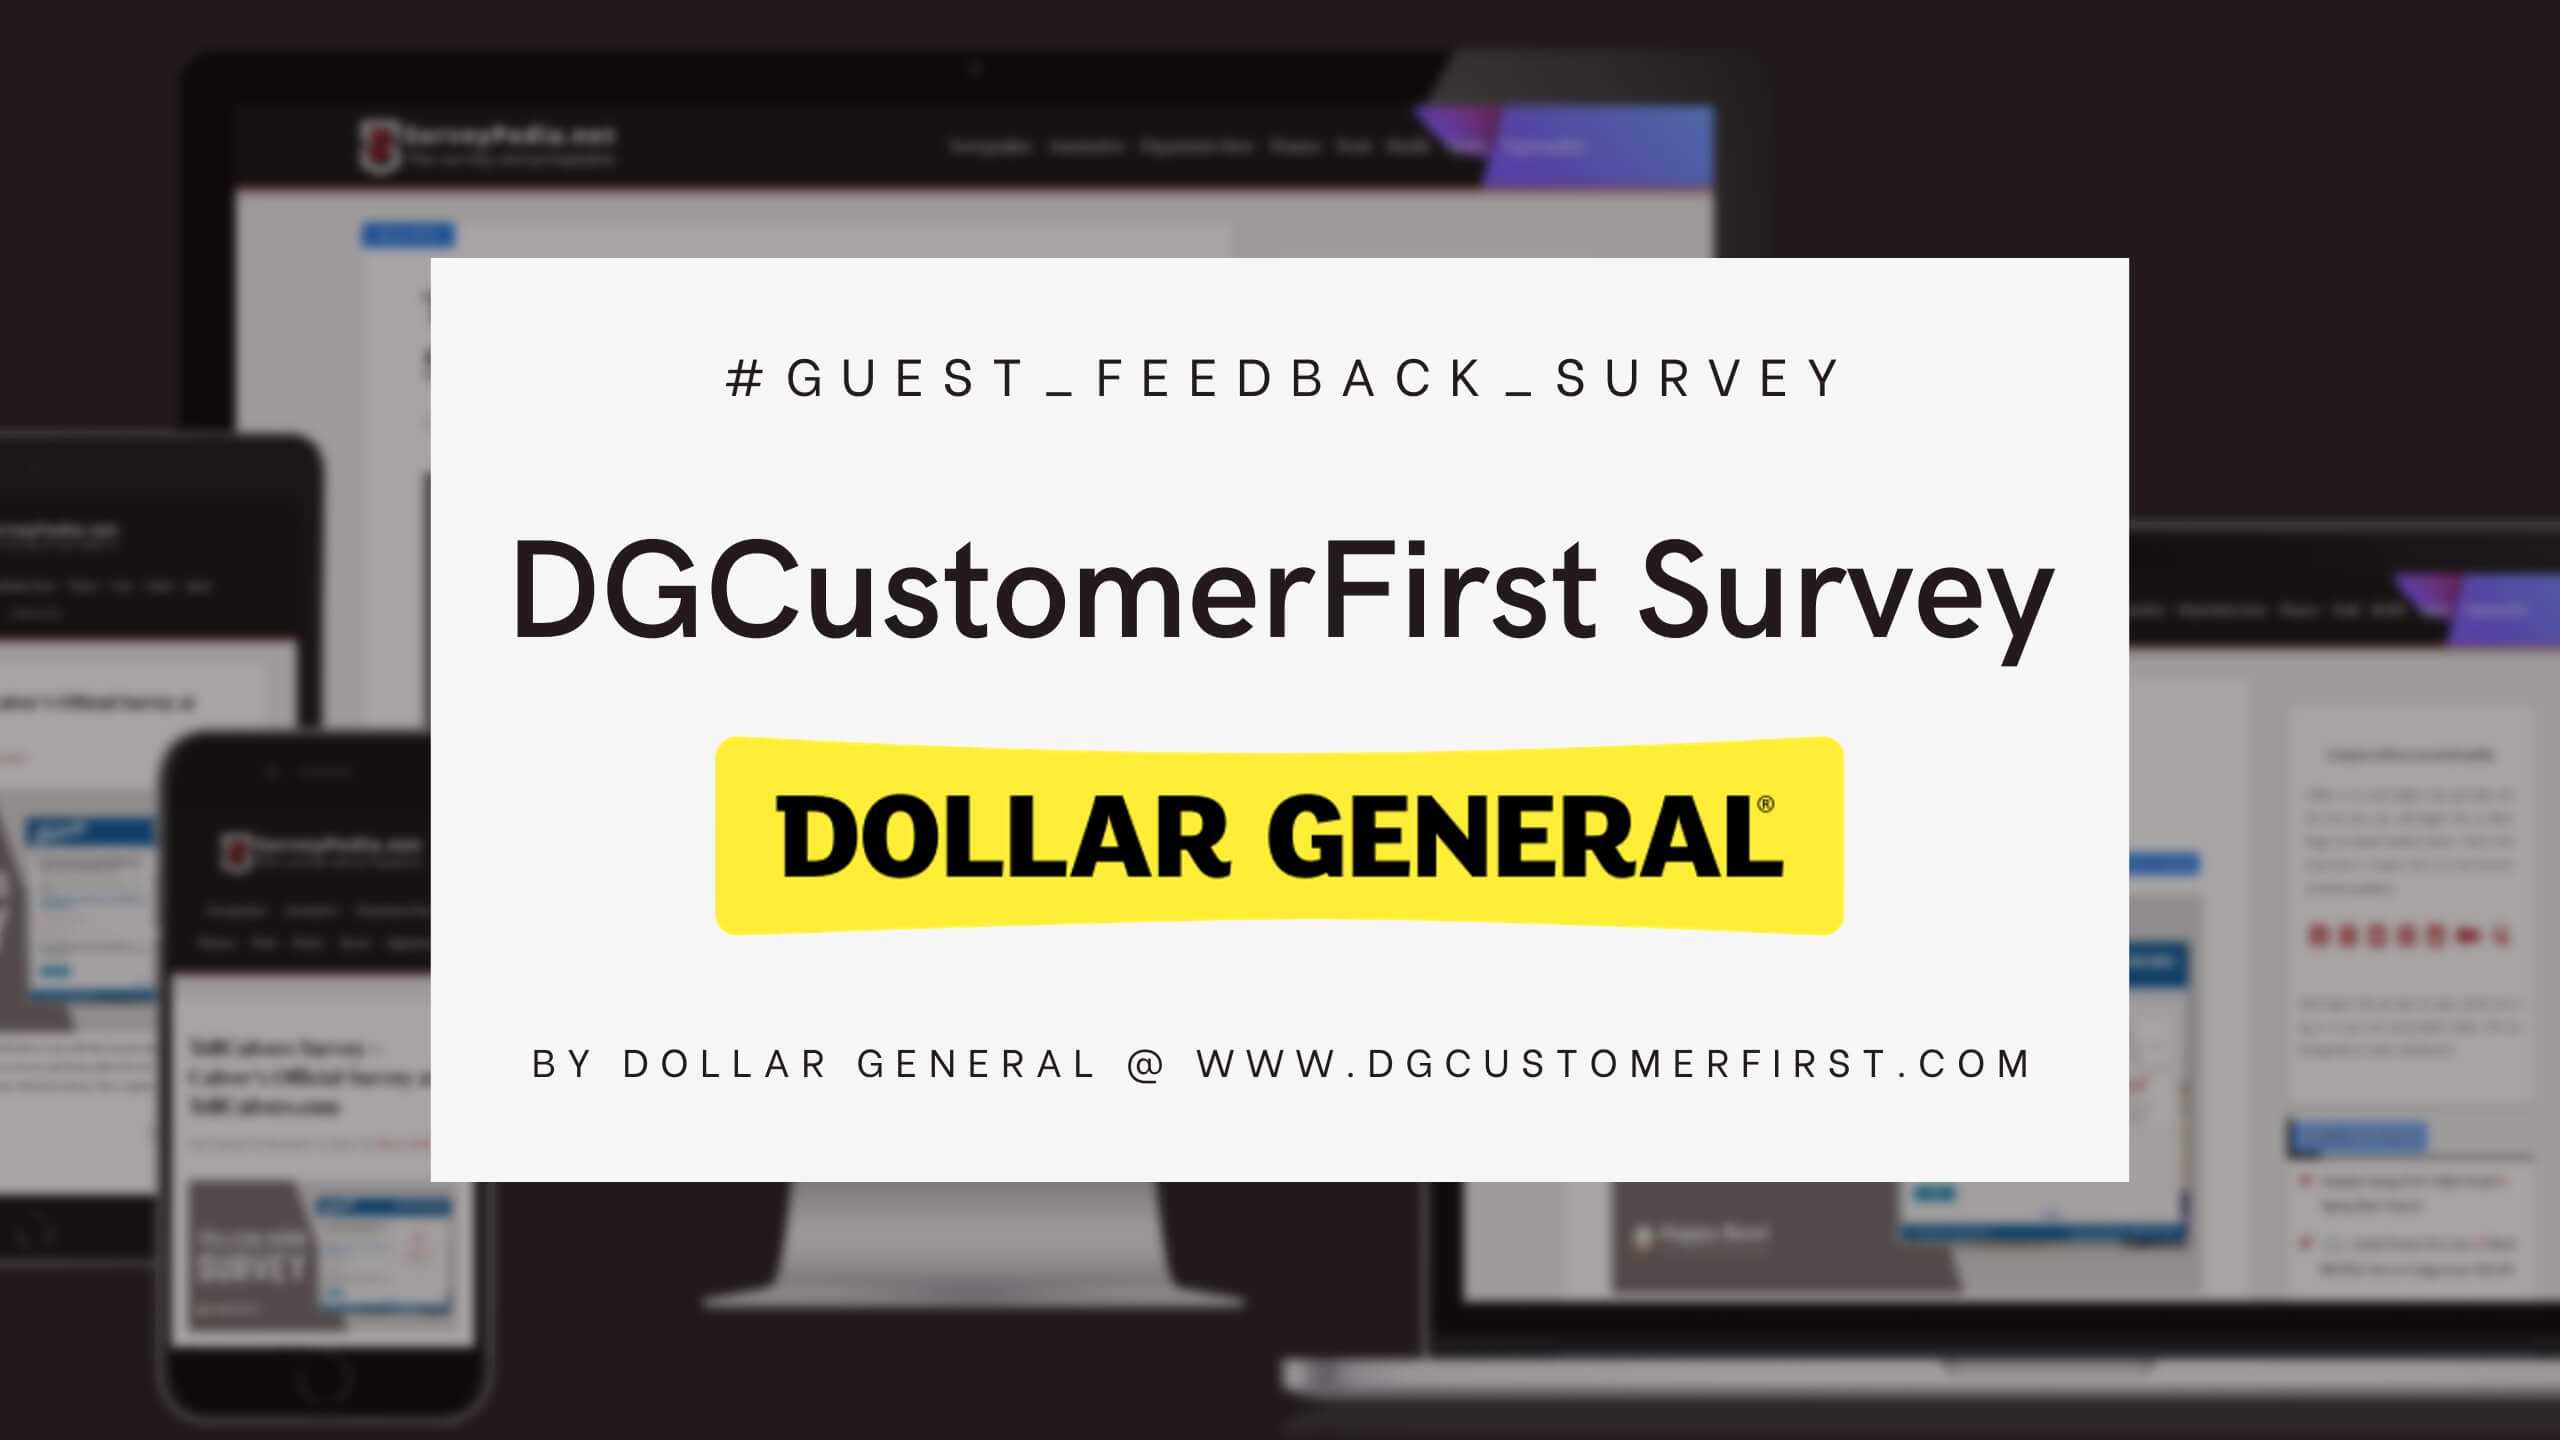 DGCustomerFirst Survey - Dollar General Customer Feedback Survey at www.dgcustomerfirst.com